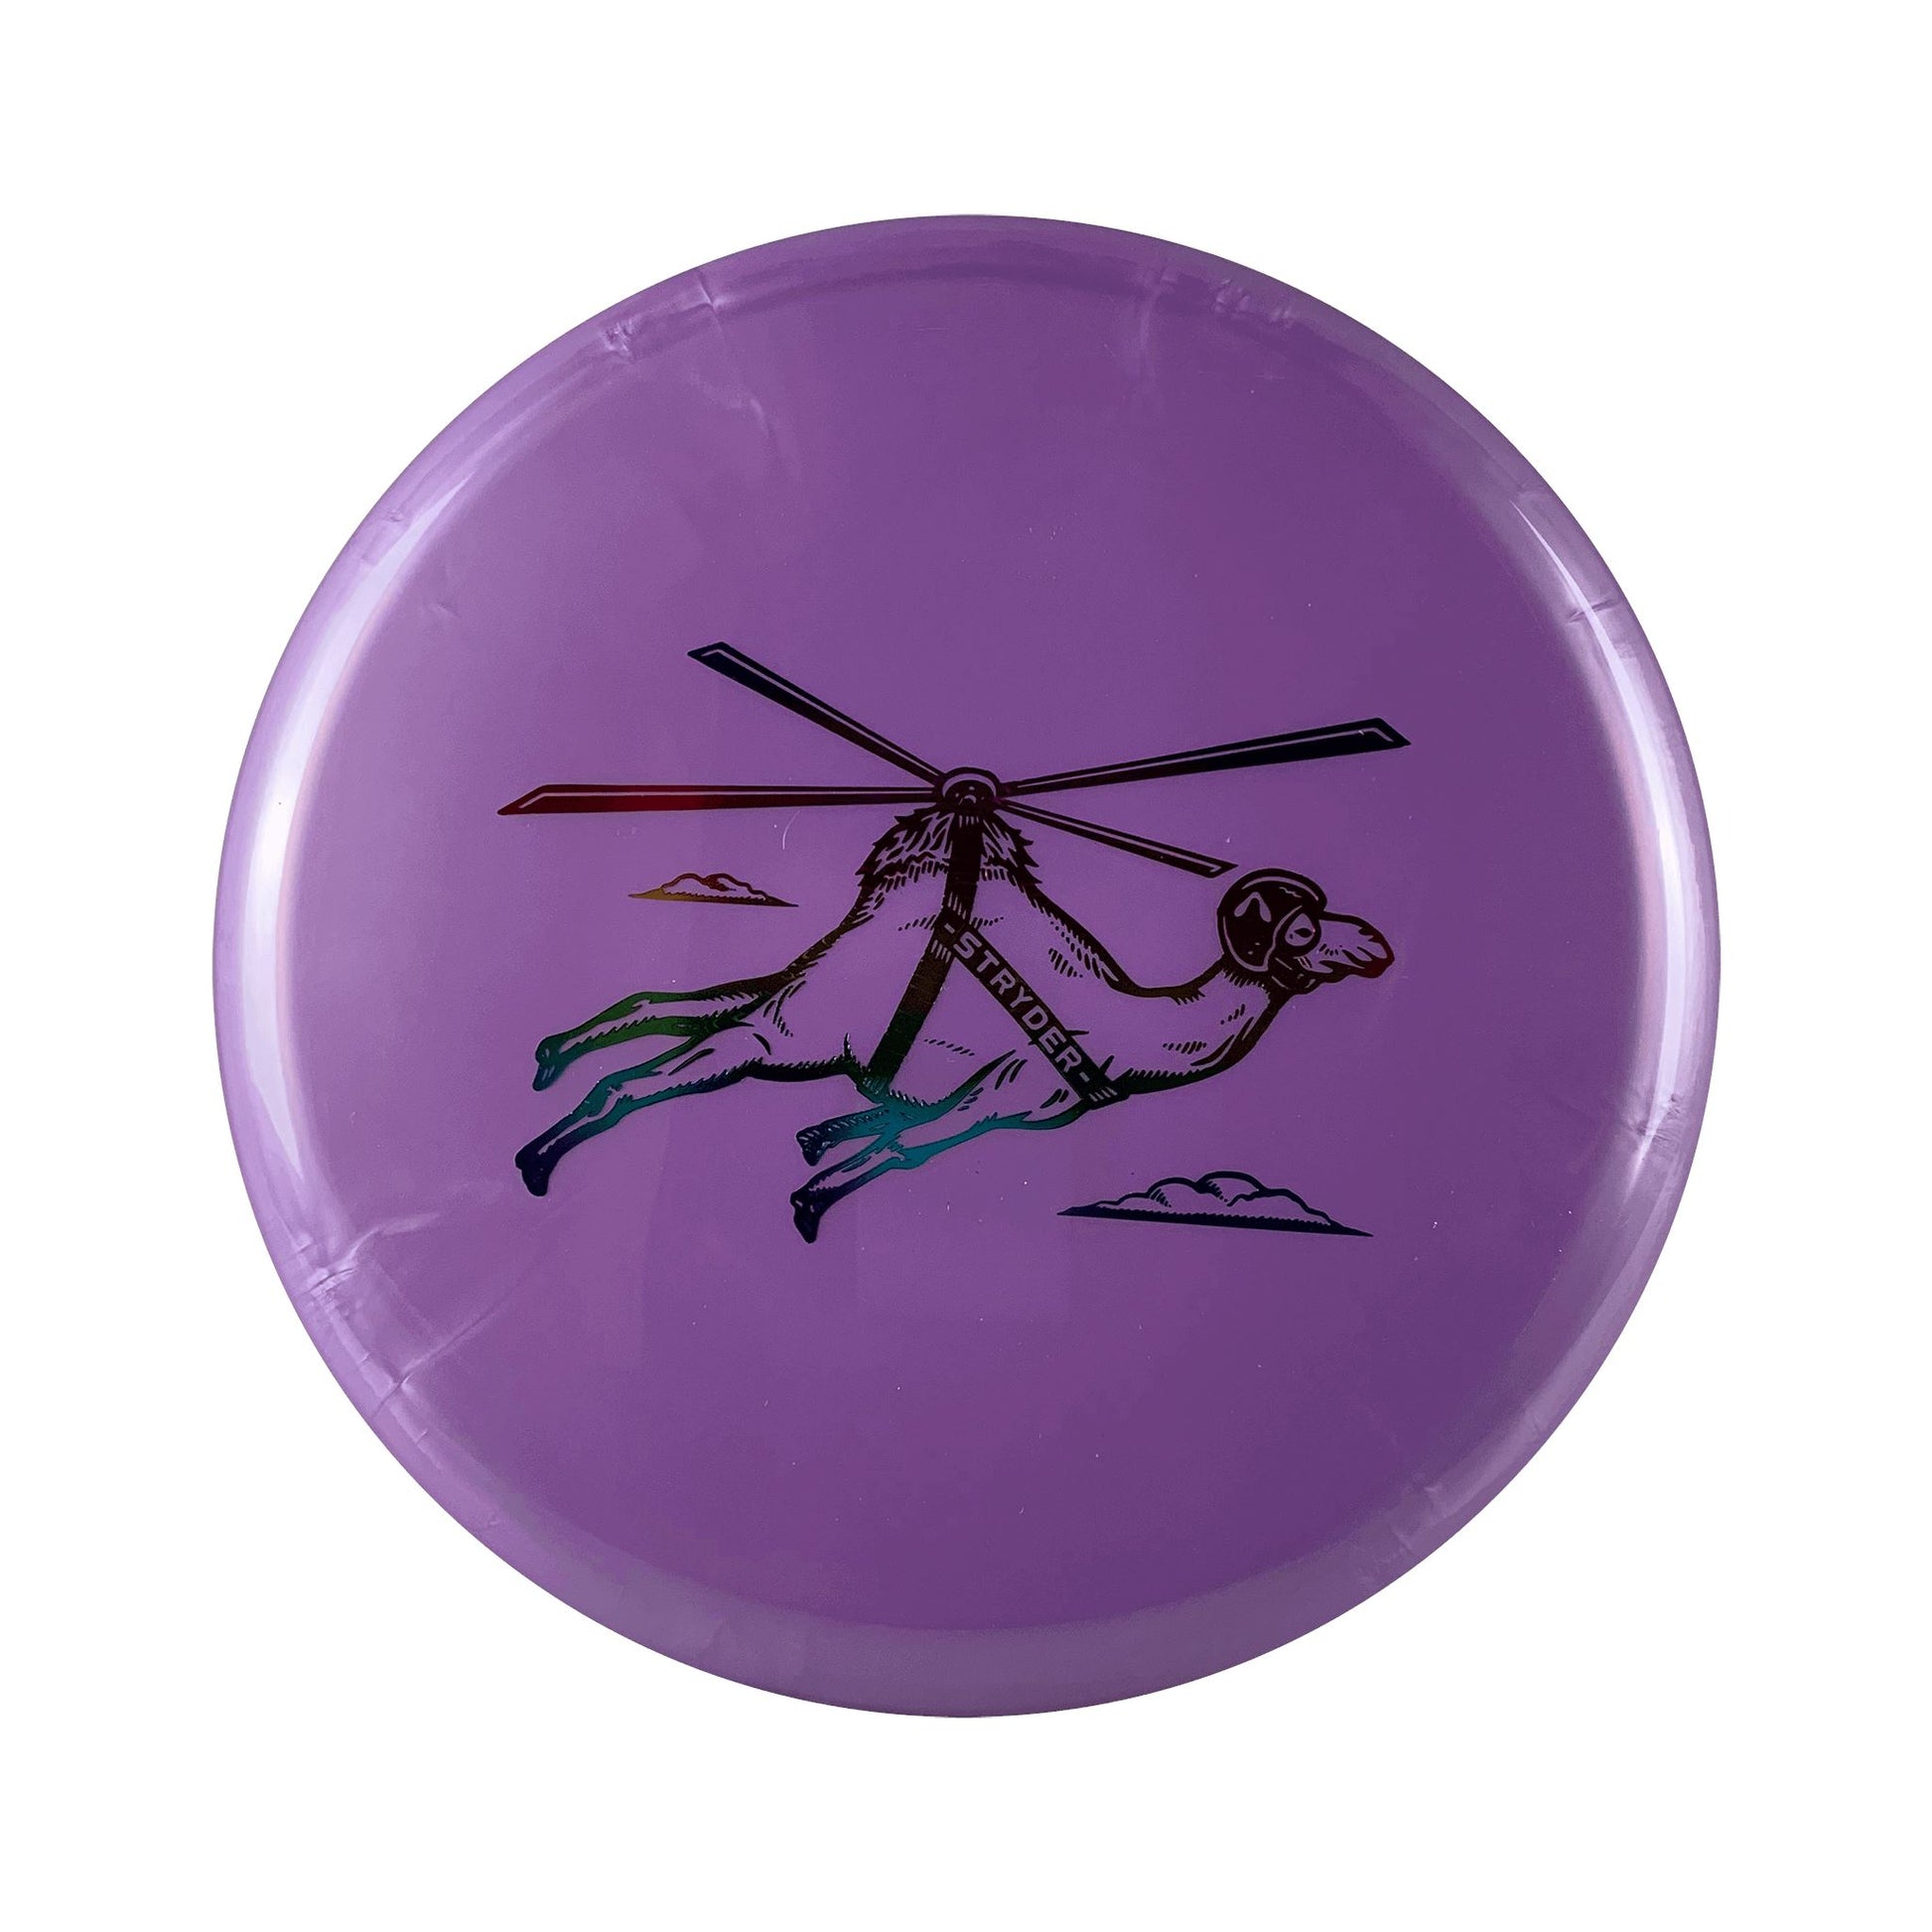 500 Stryder - Airborn Proto Stamp Cale Leiviska Disc Prodigy purple 178 